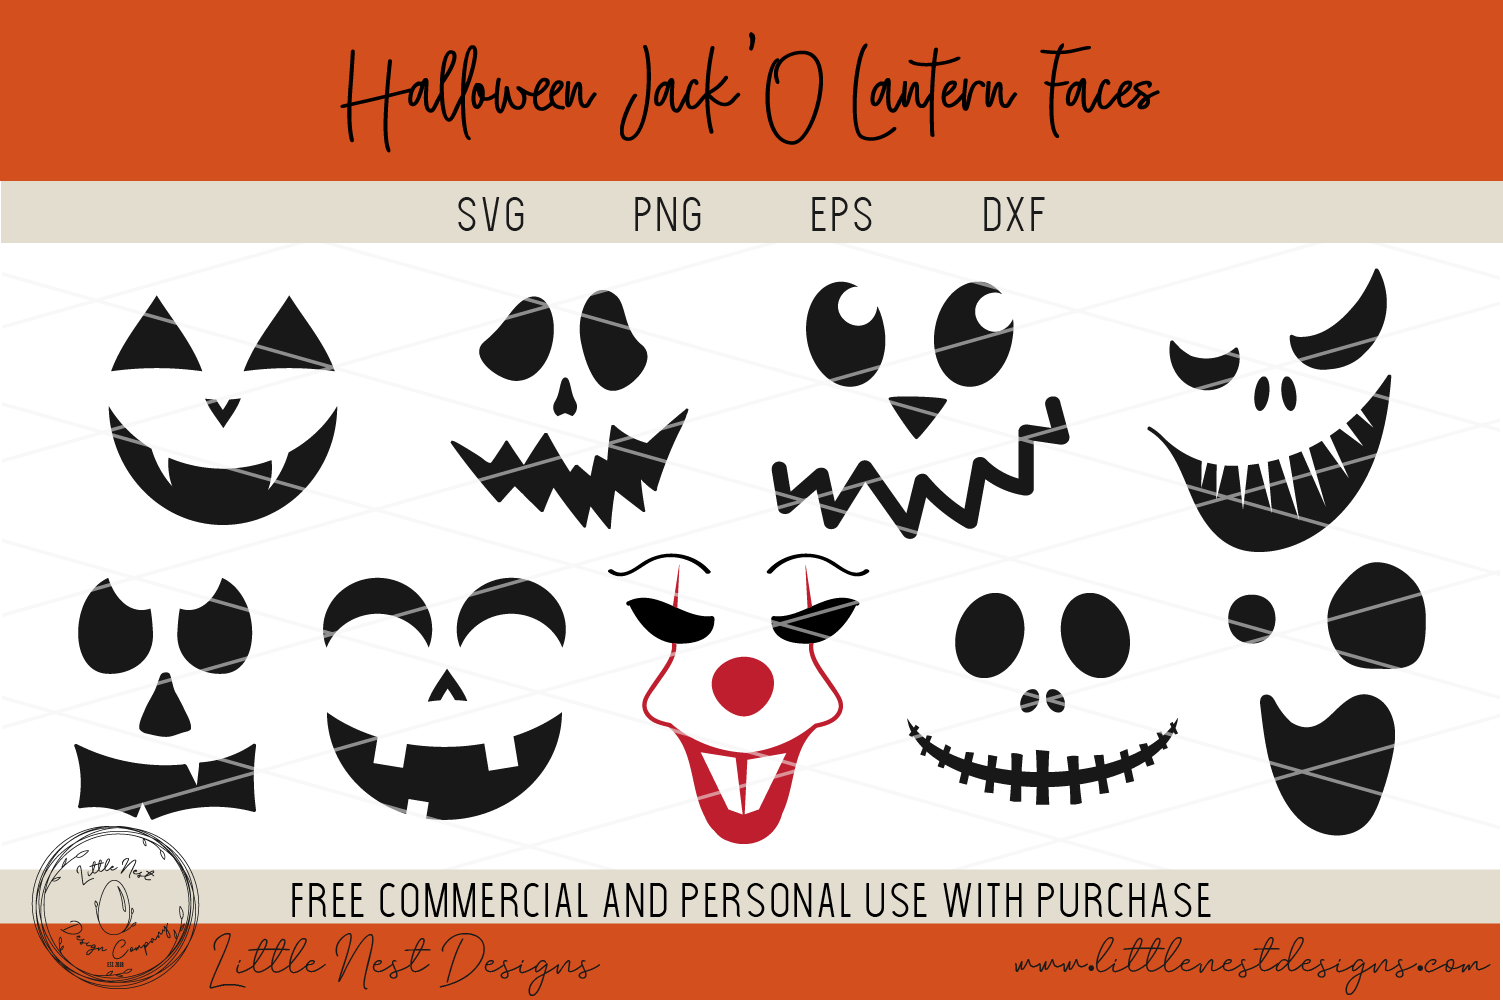 easy halloween jack o lantern faces